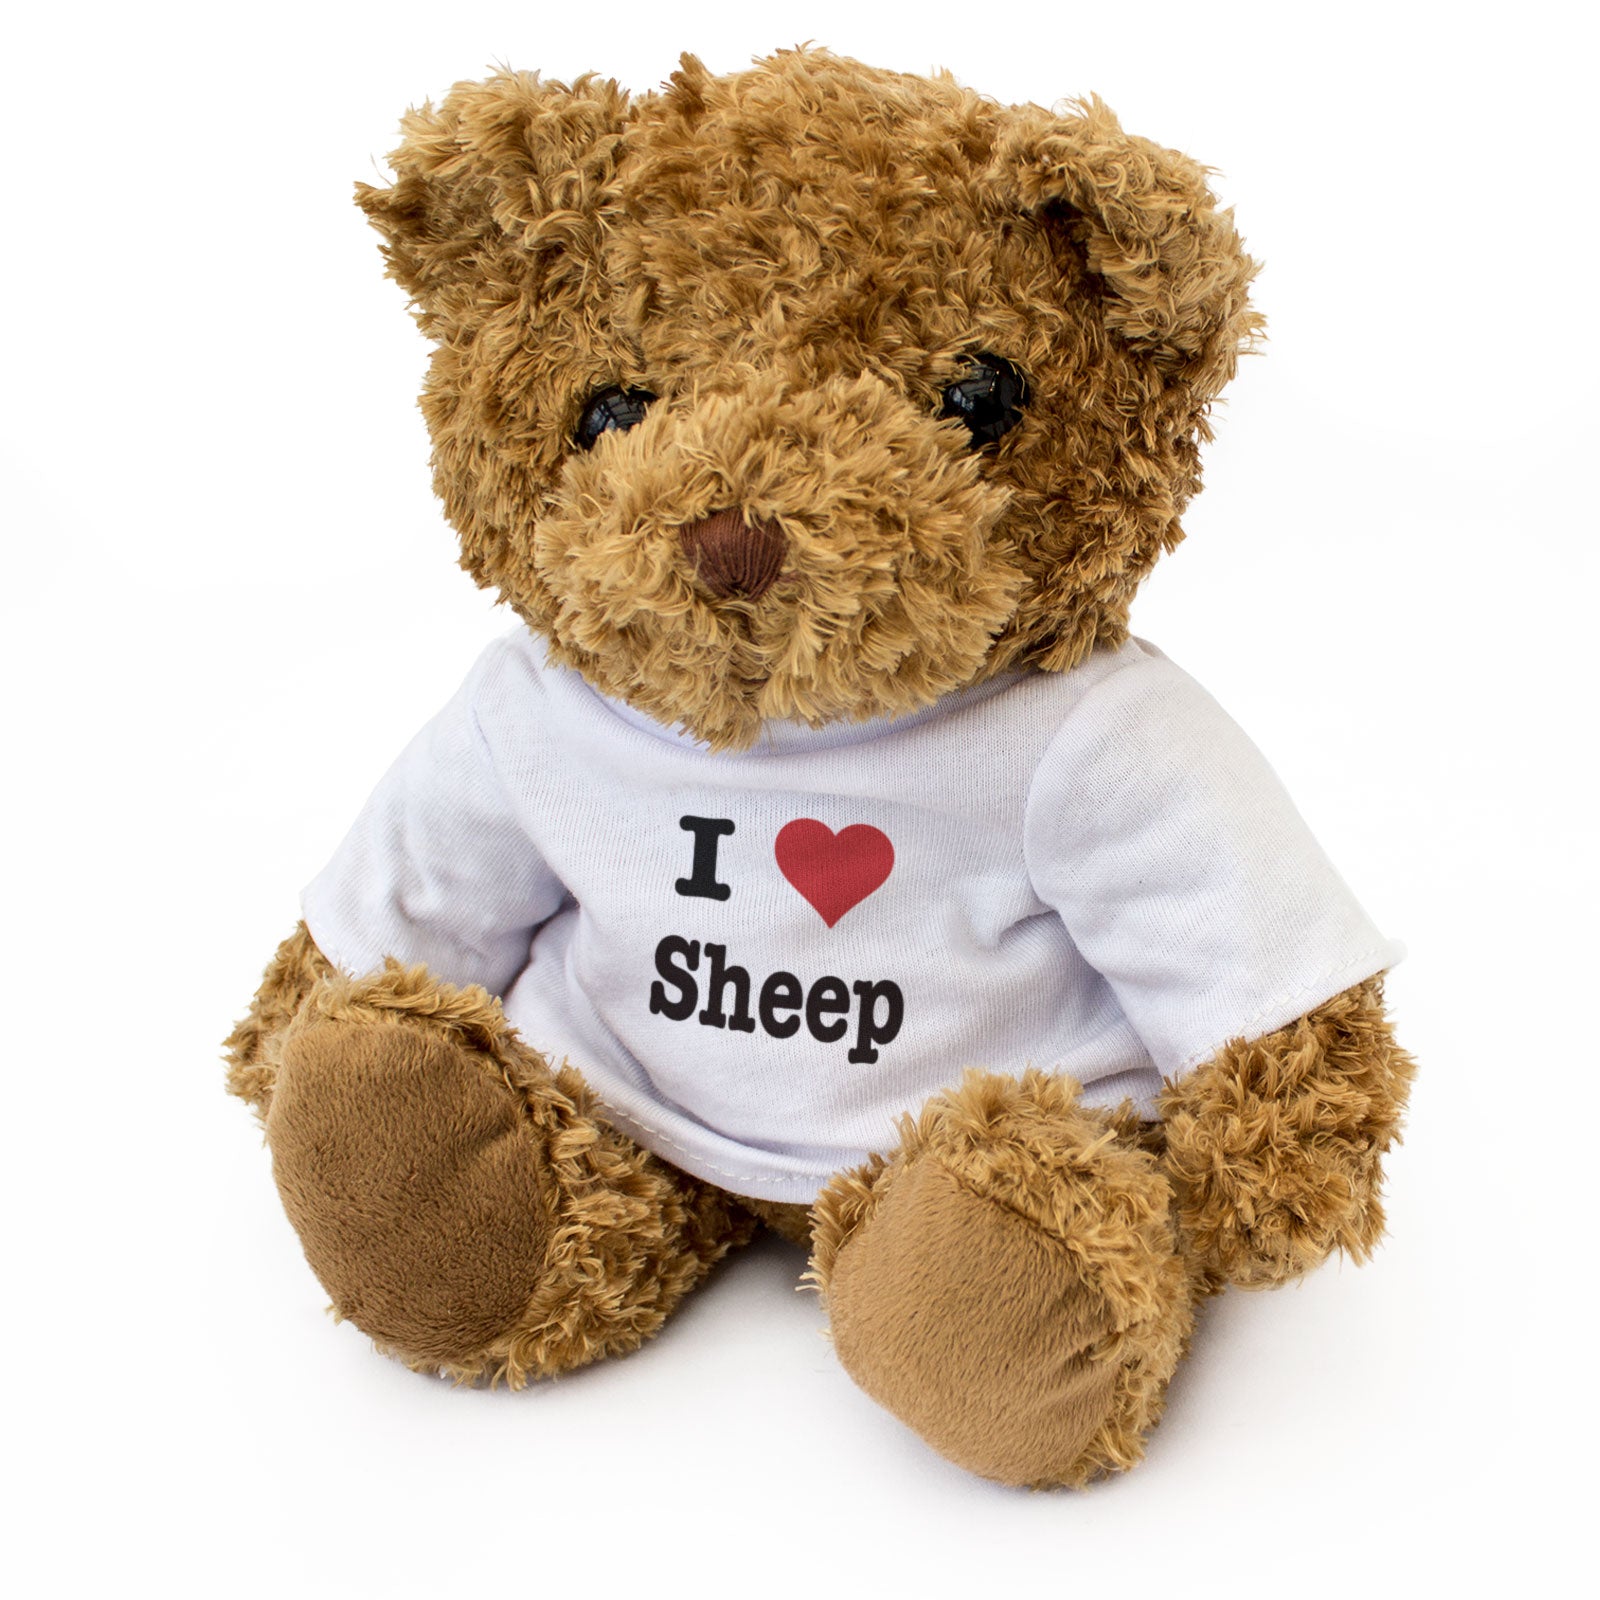 I Love Sheep - Teddy Bear